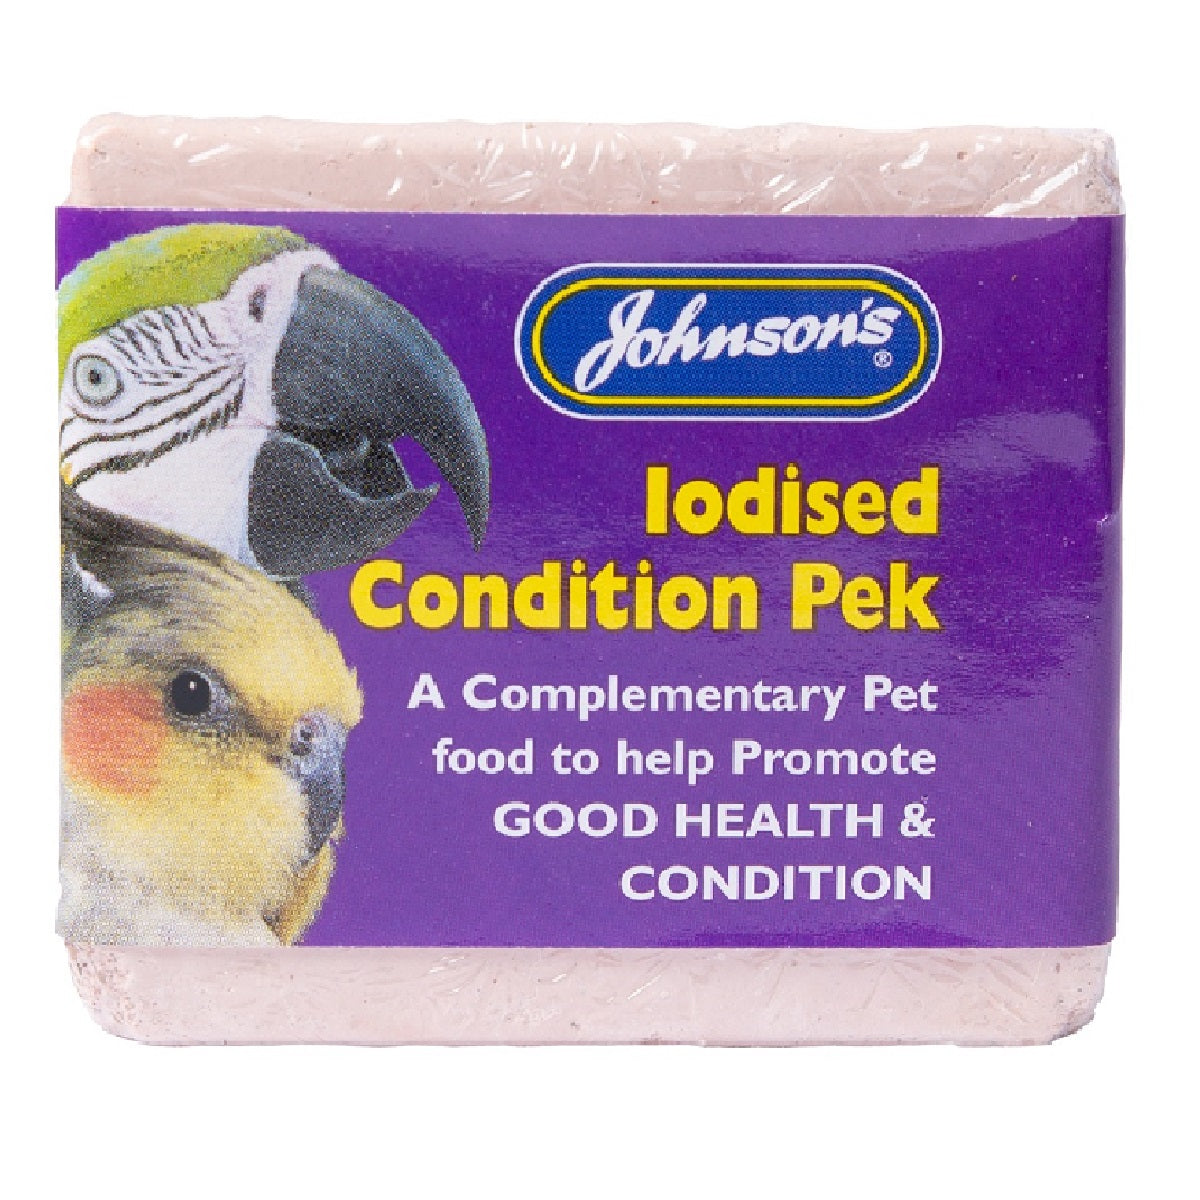 Johnson's - Iodised Condition Pek